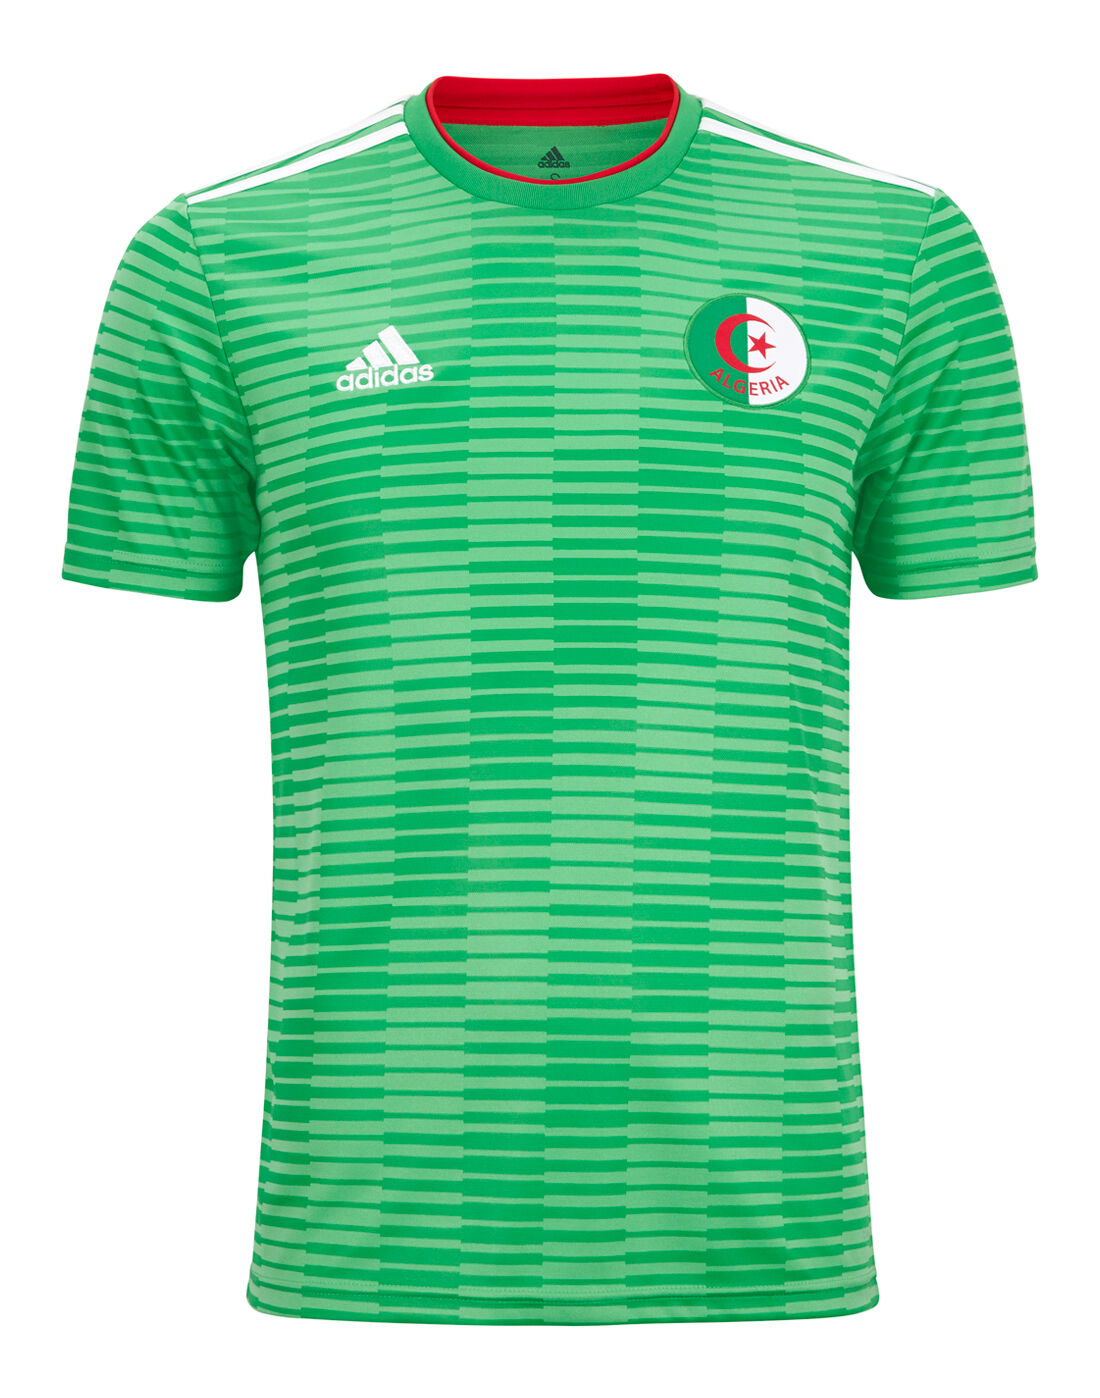 algerian football shirt adidas